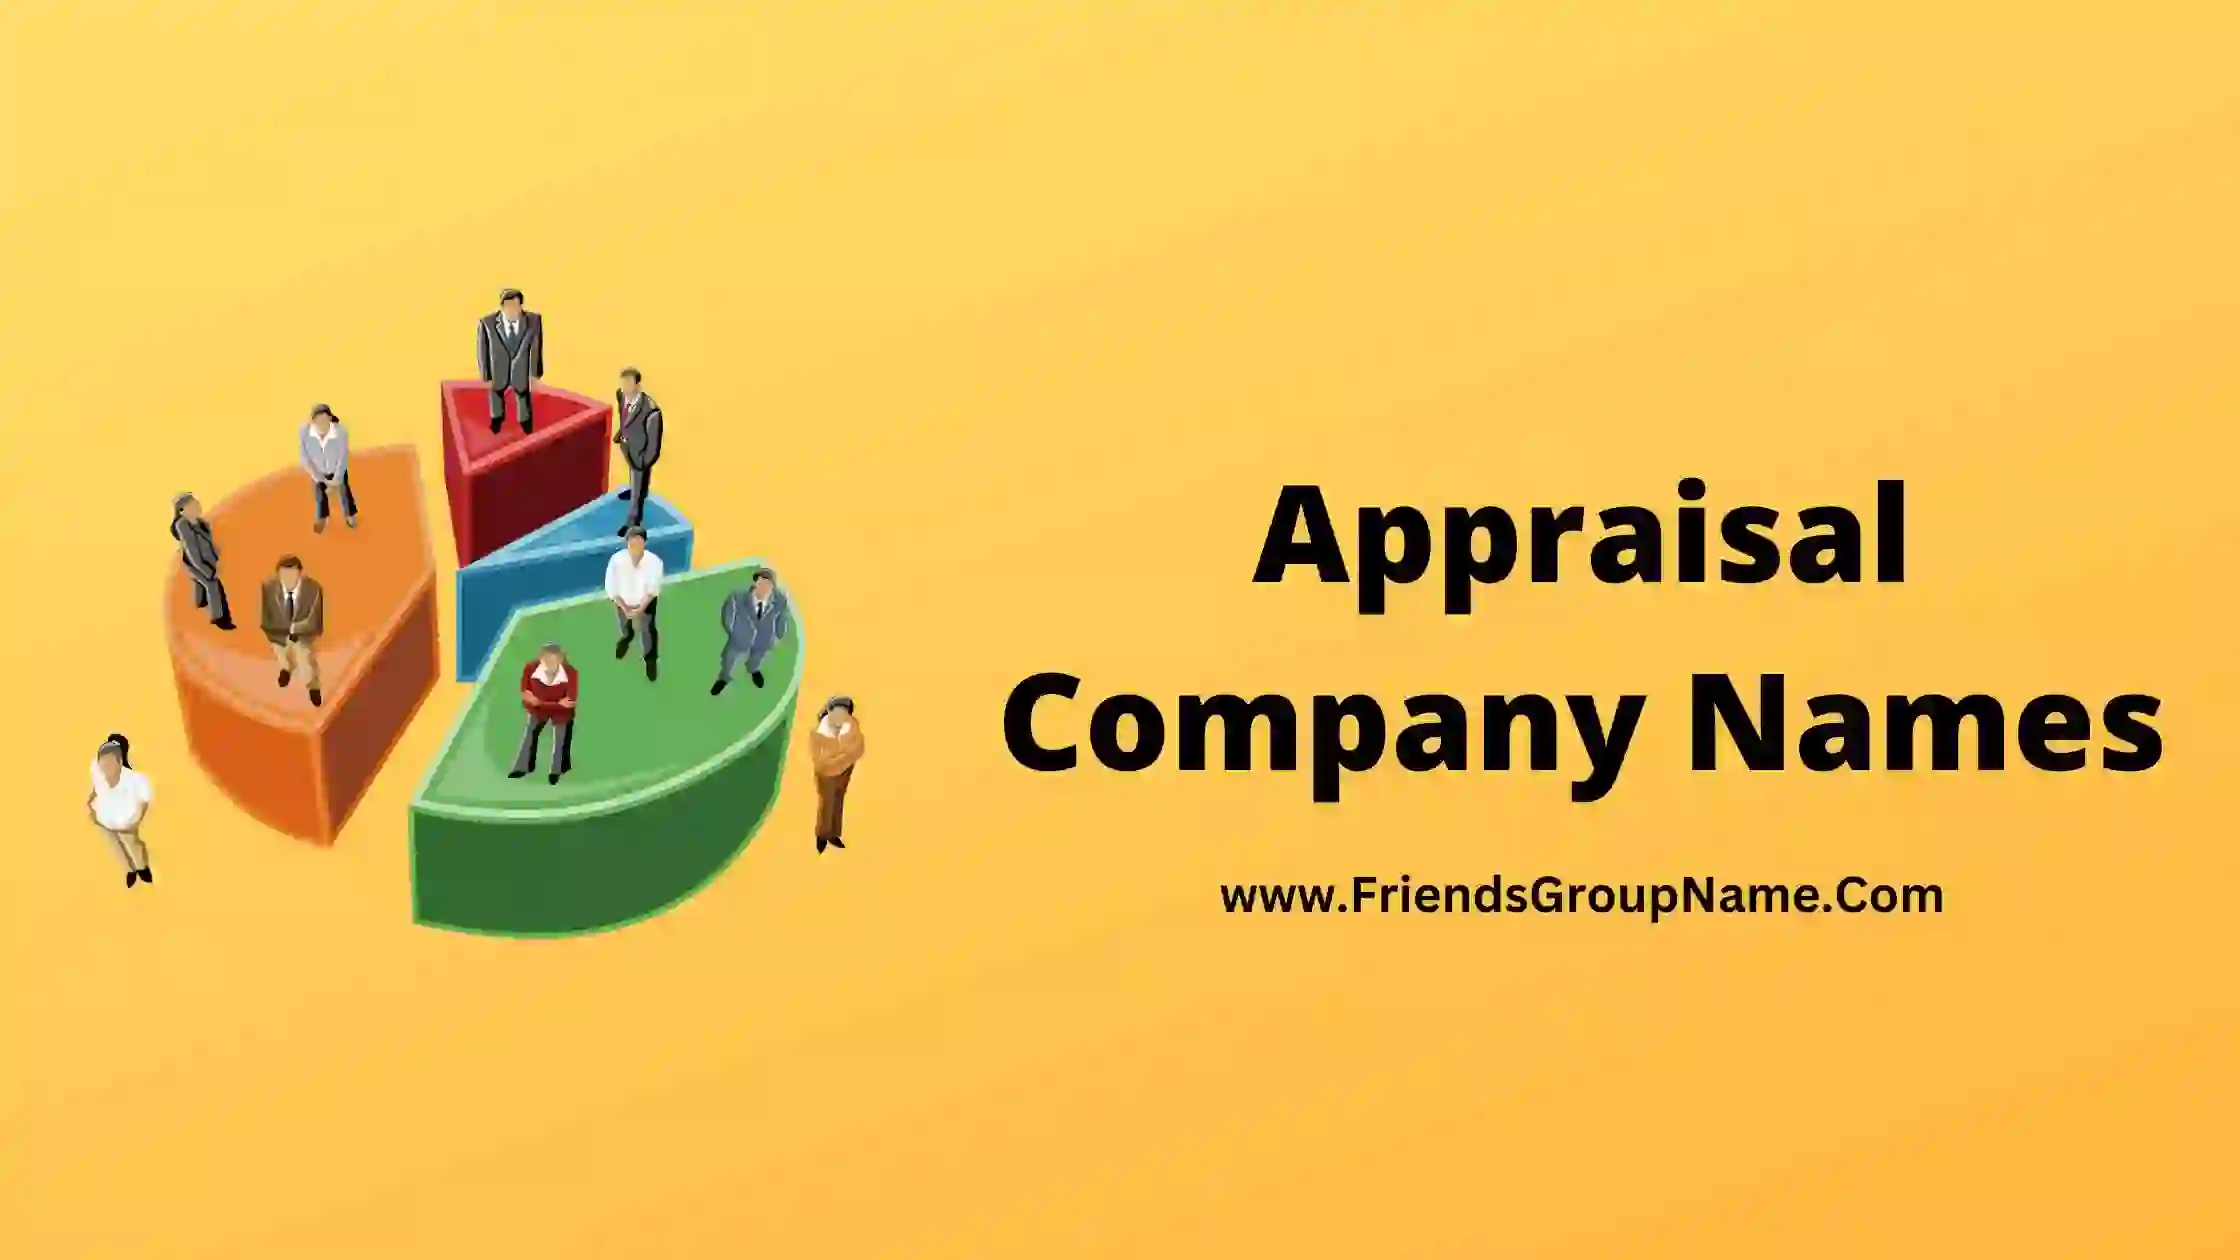 Appraisal Company Names